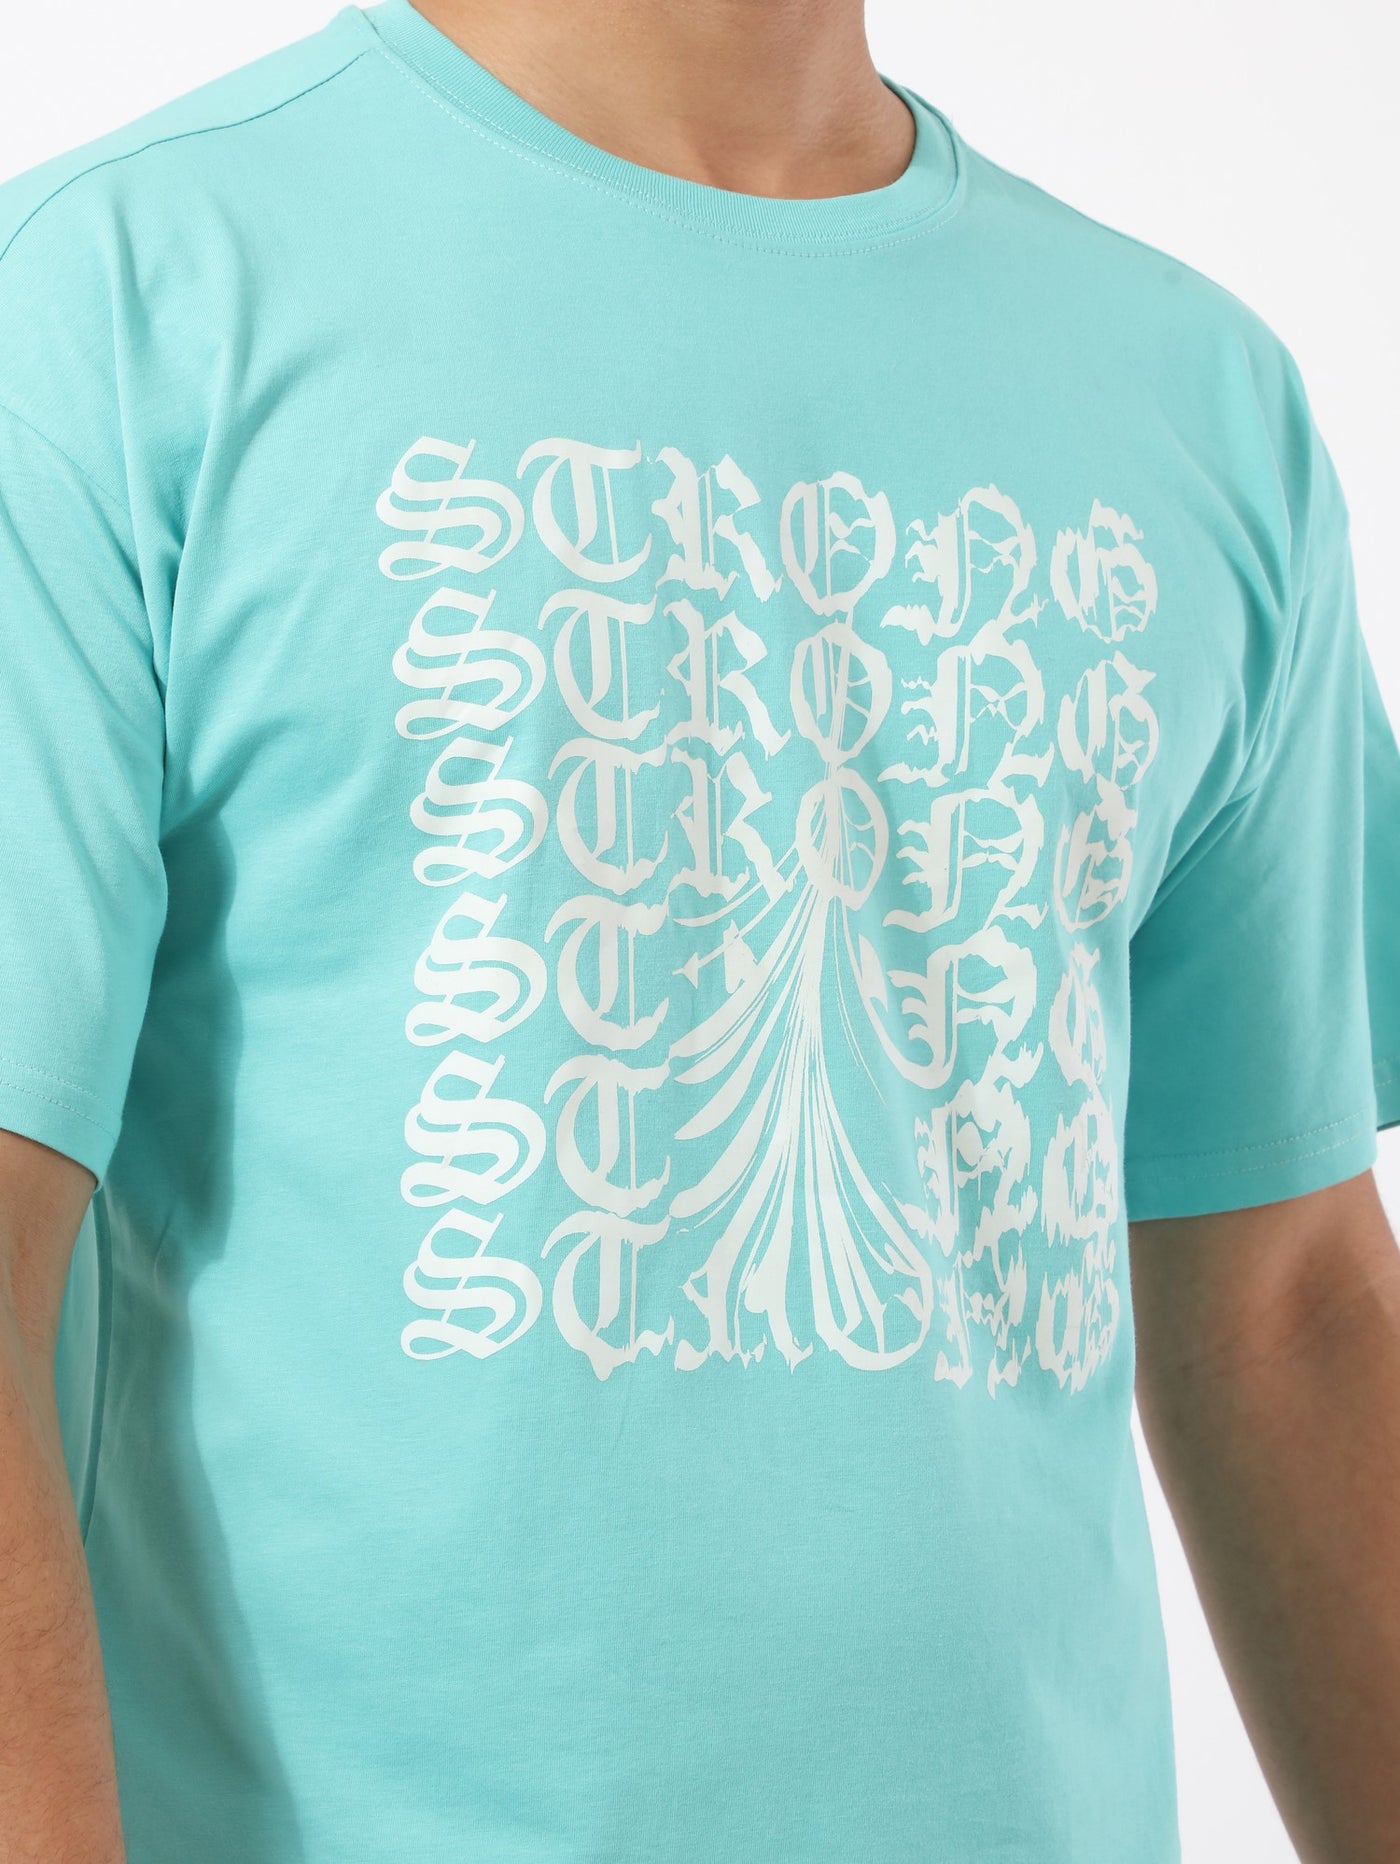 T-Shirt - Letters Printed - Half Sleeves